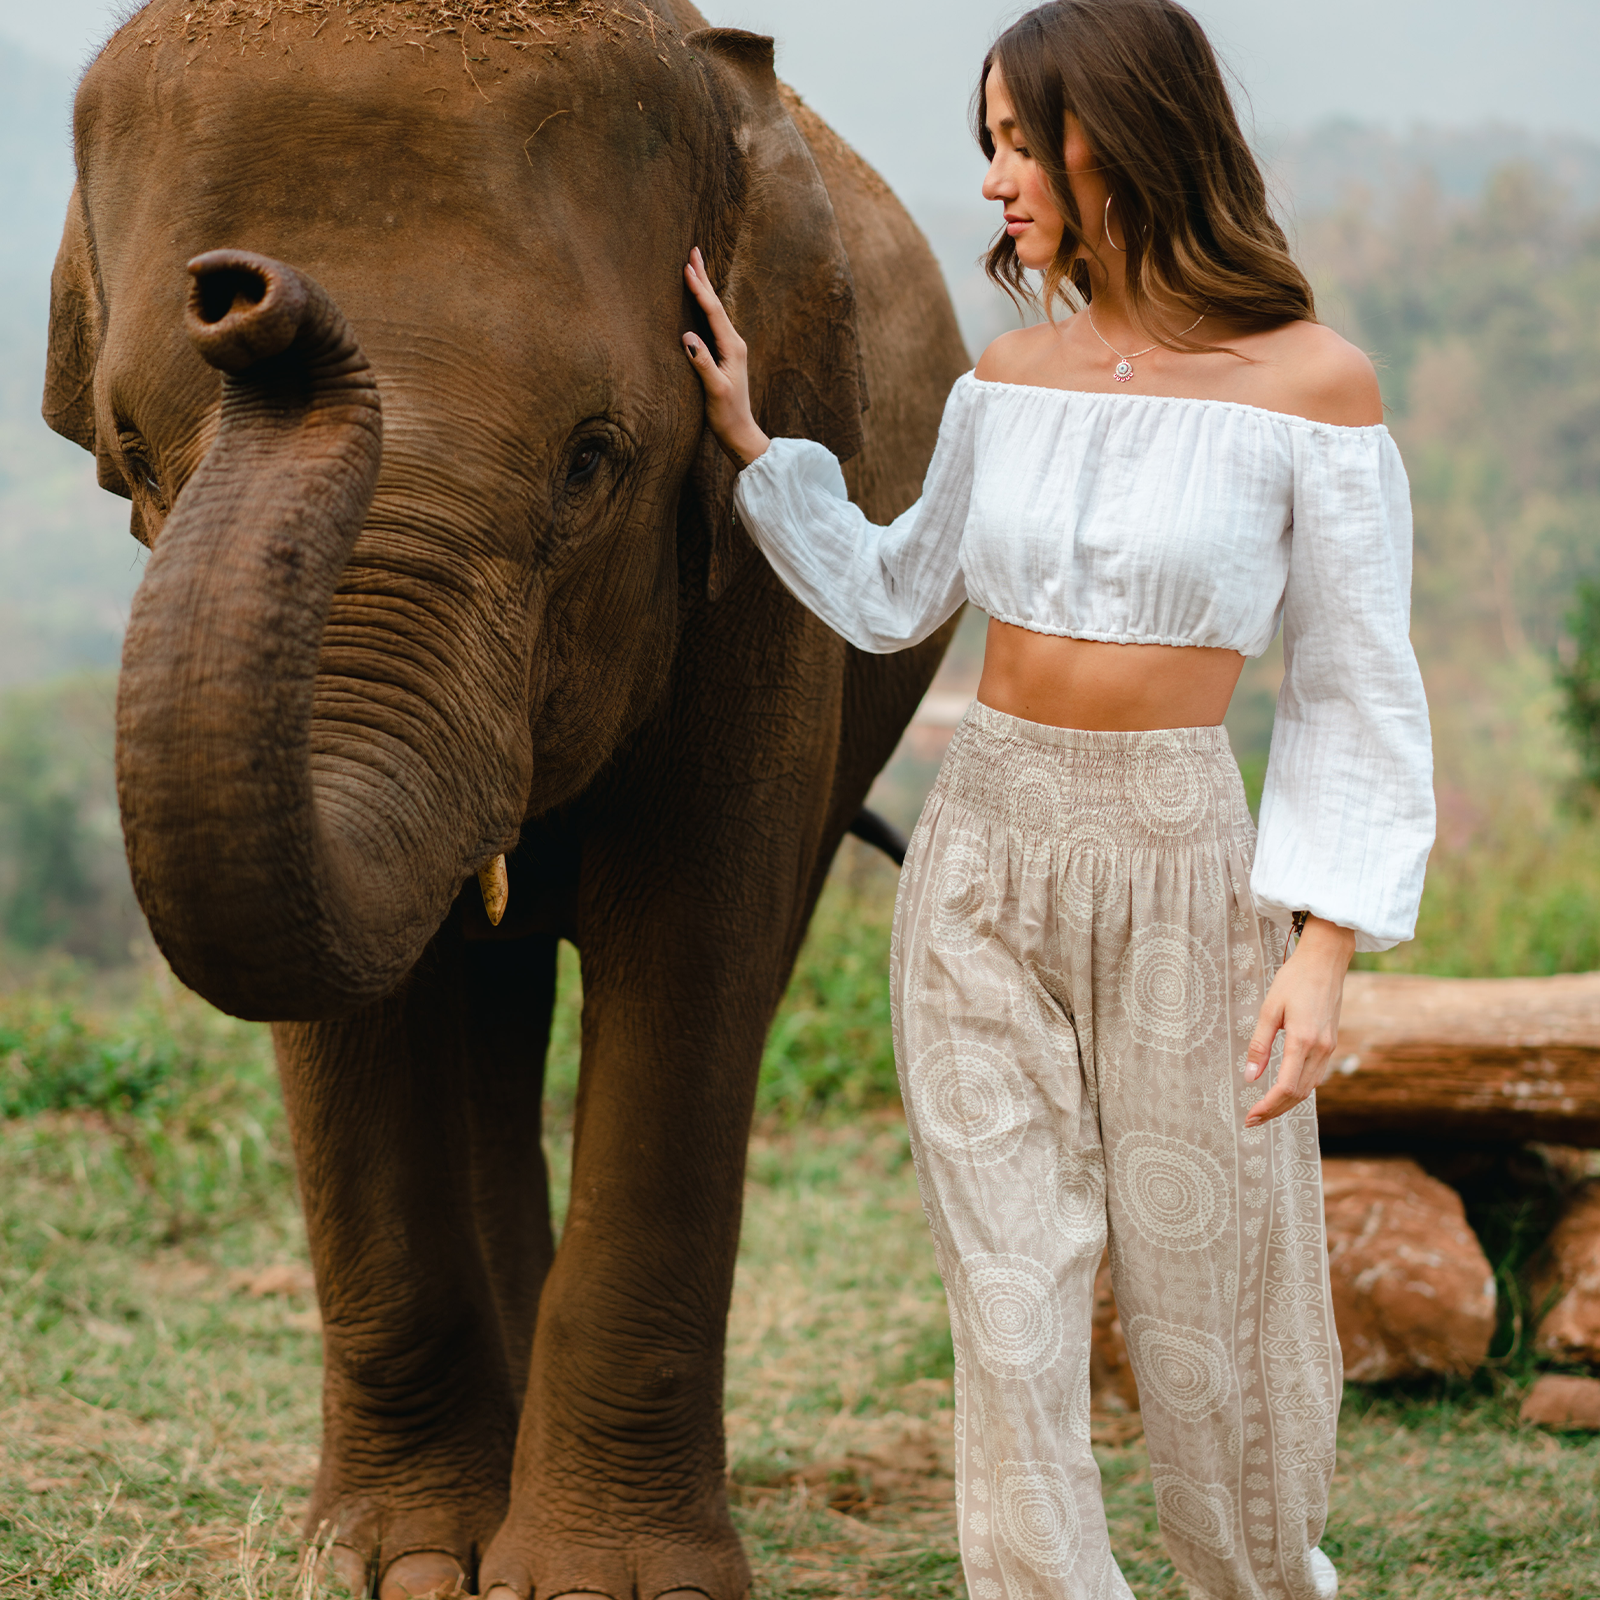 Woman Wearing Thai Harem Pants Photographed with Elephant